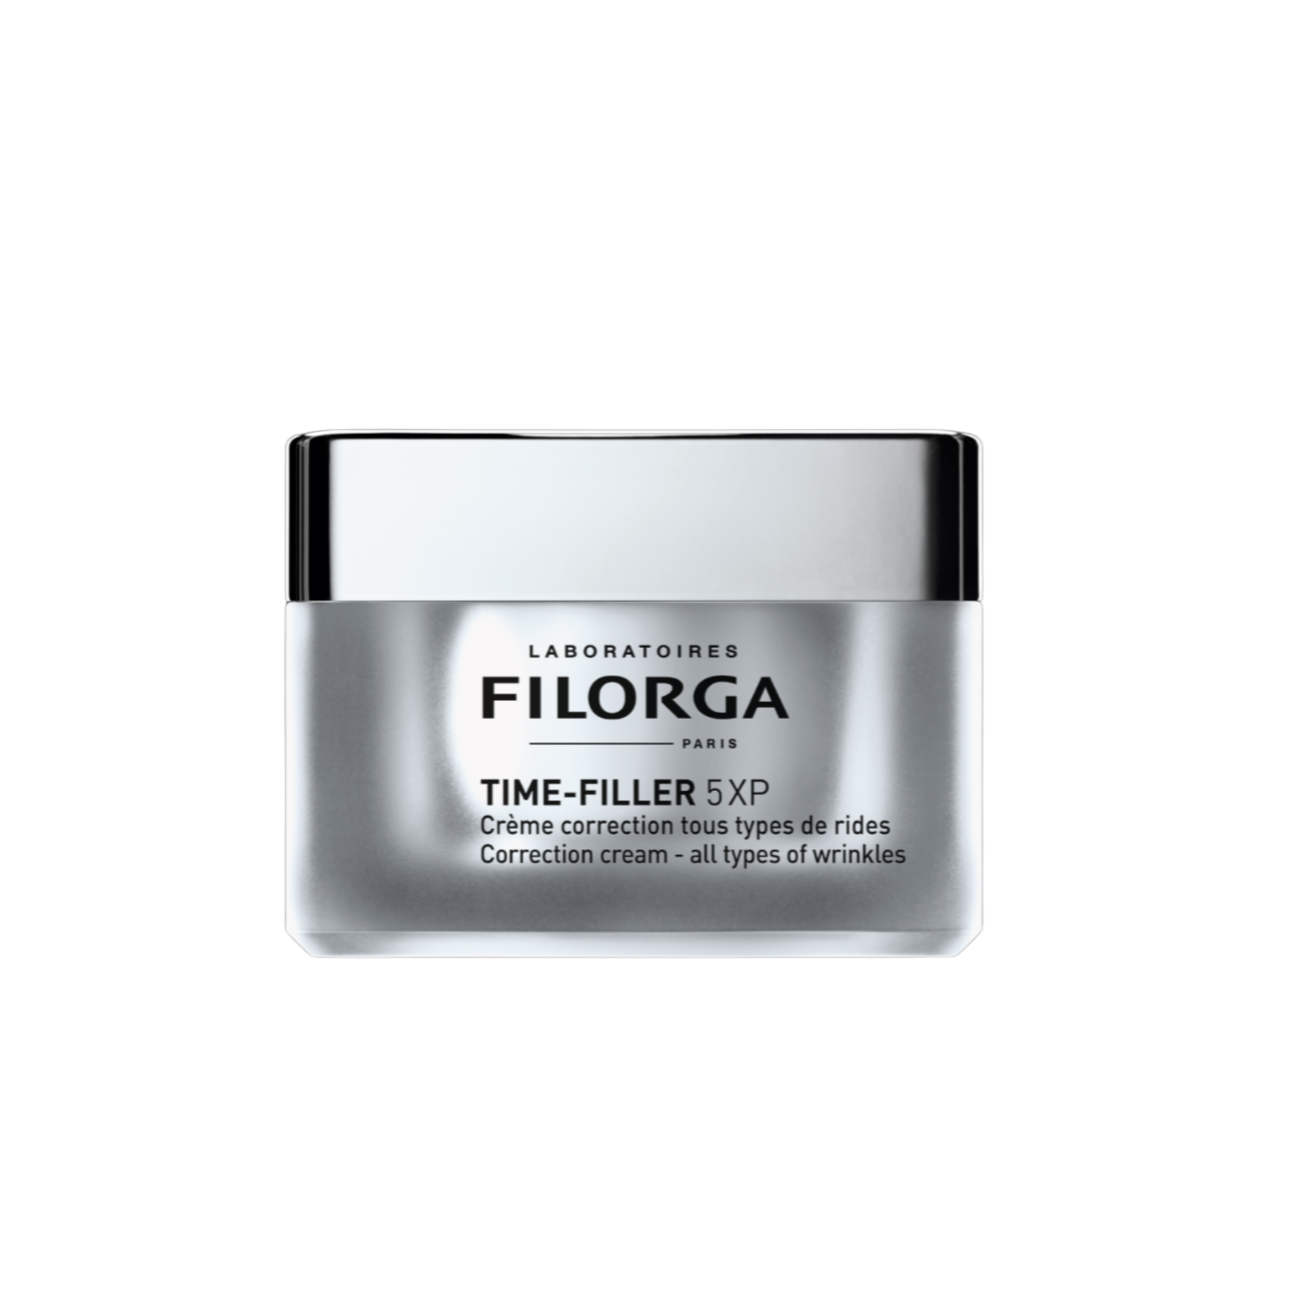 FILORGA TIME-FILLER 5-XP cream closed jar